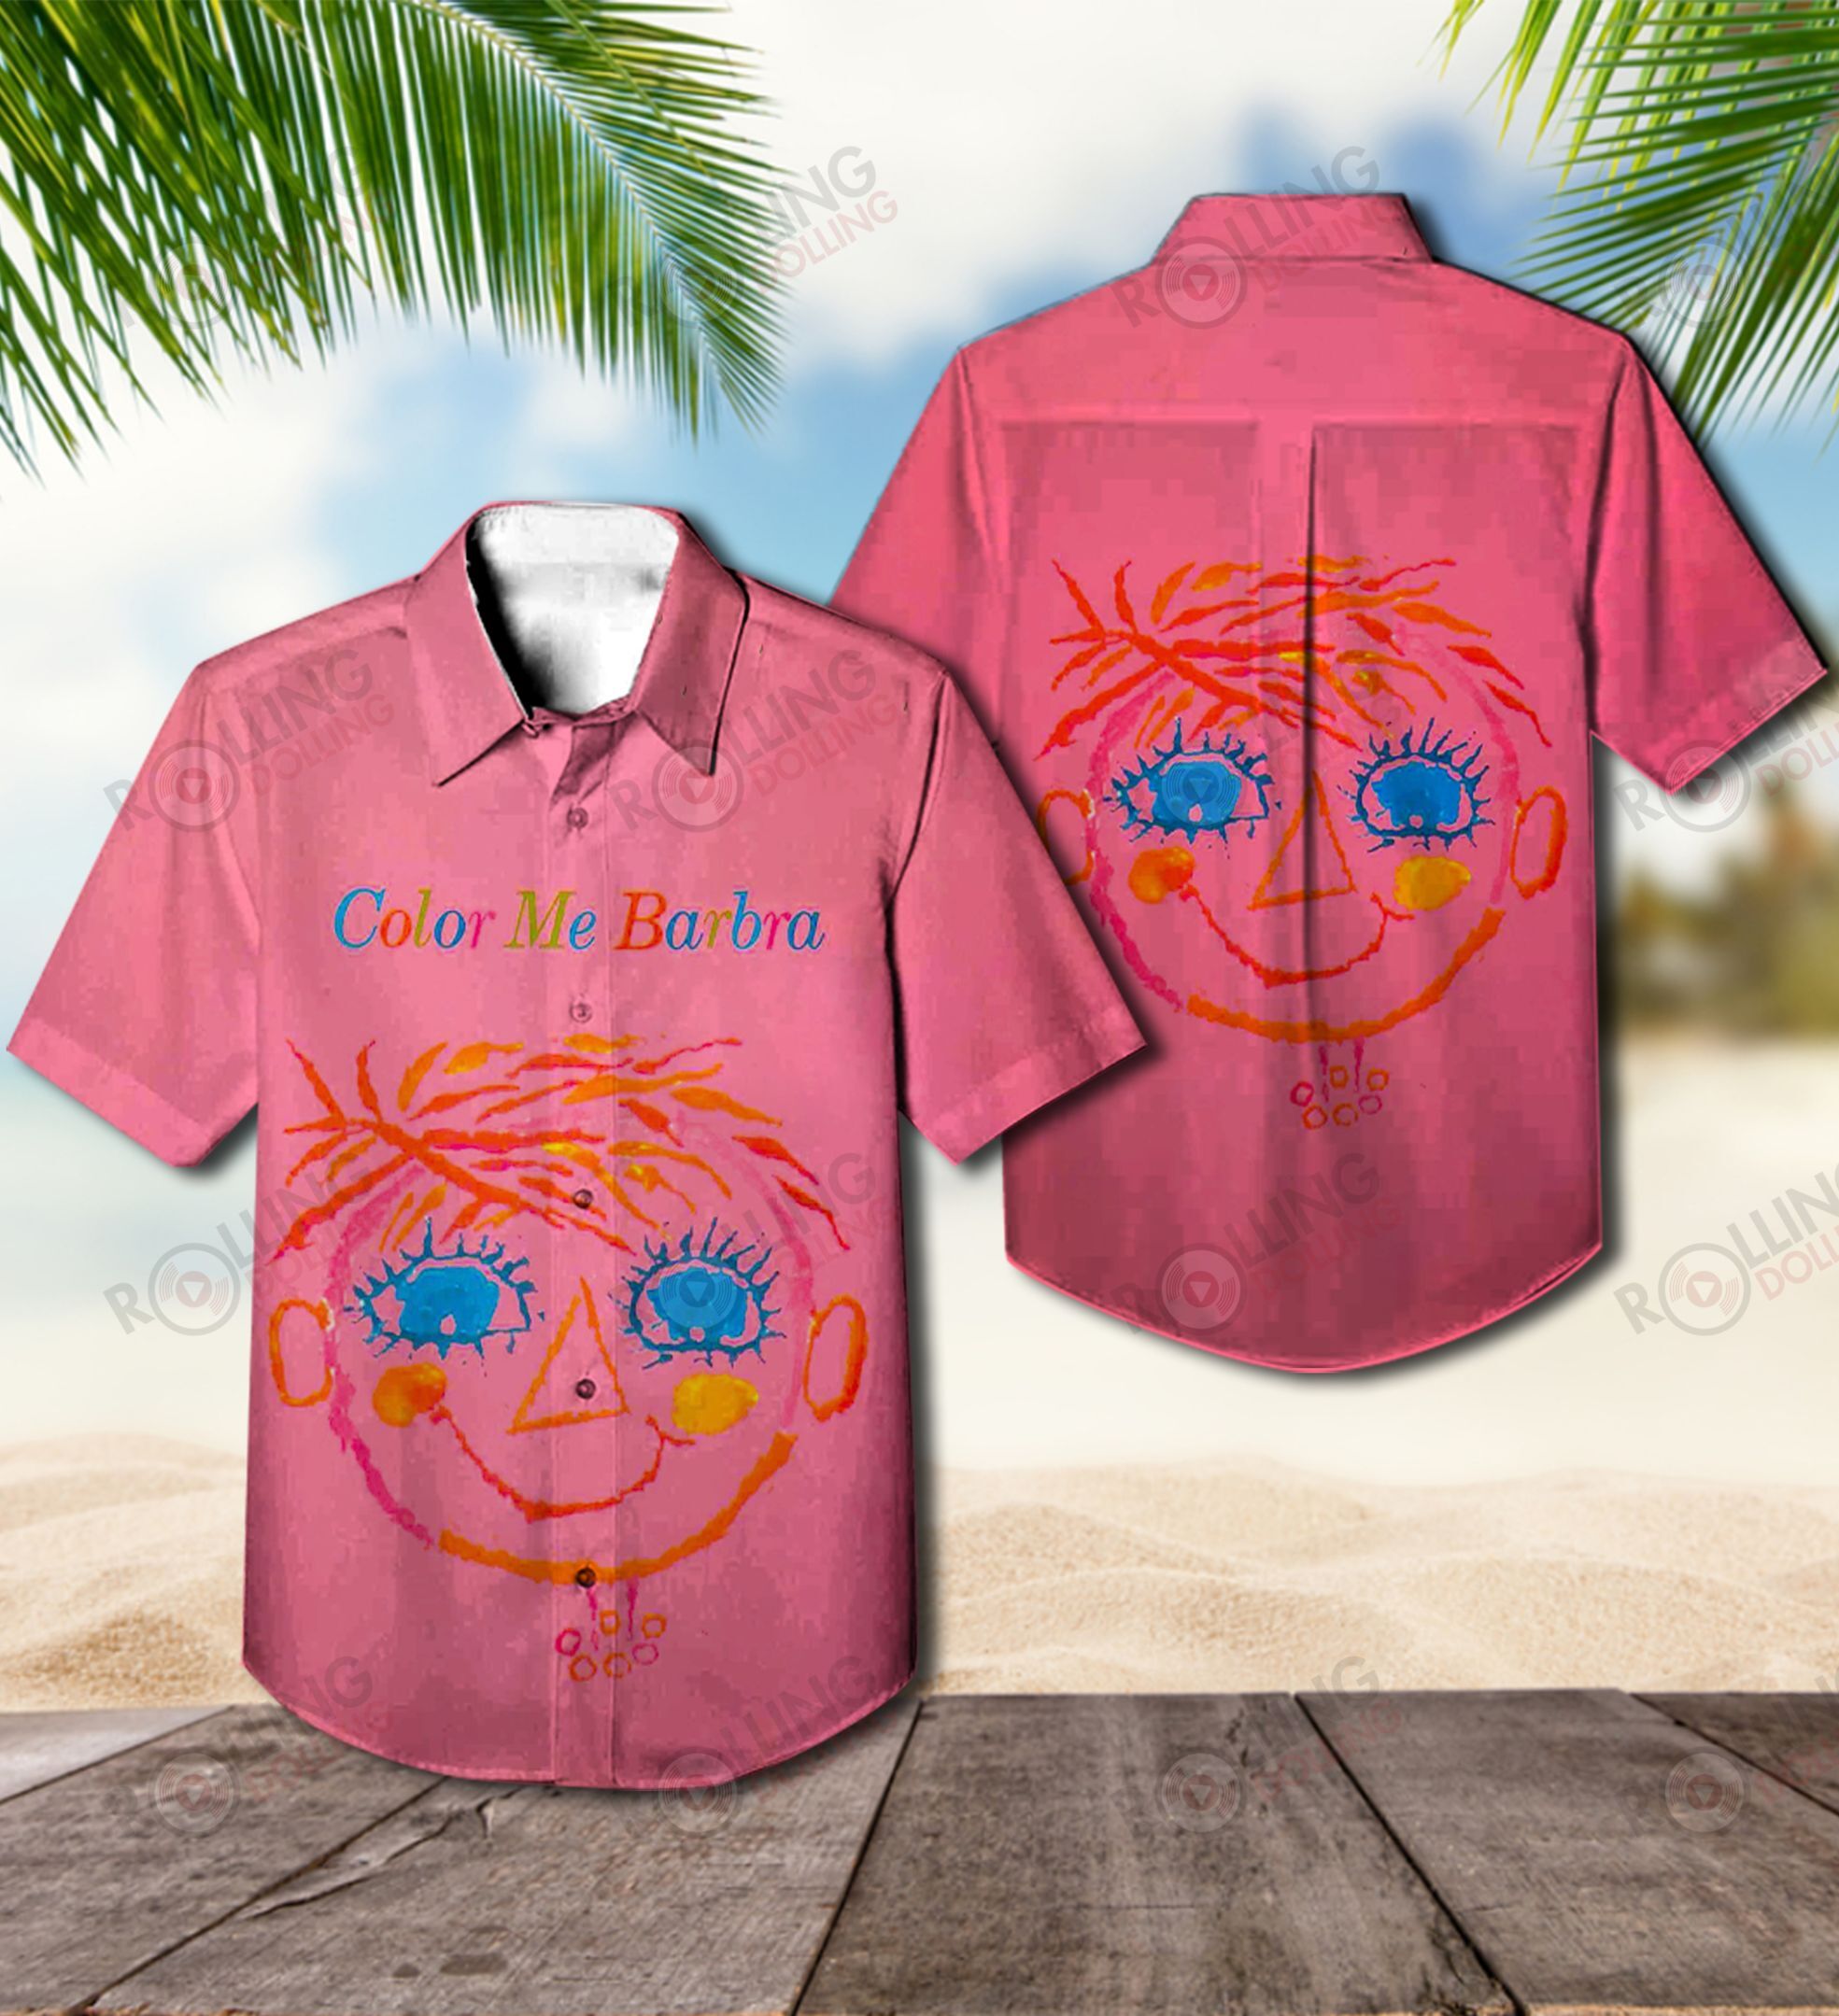 Regardless of their style, you will feel comfortable wearing Hawaiian Shirt 174